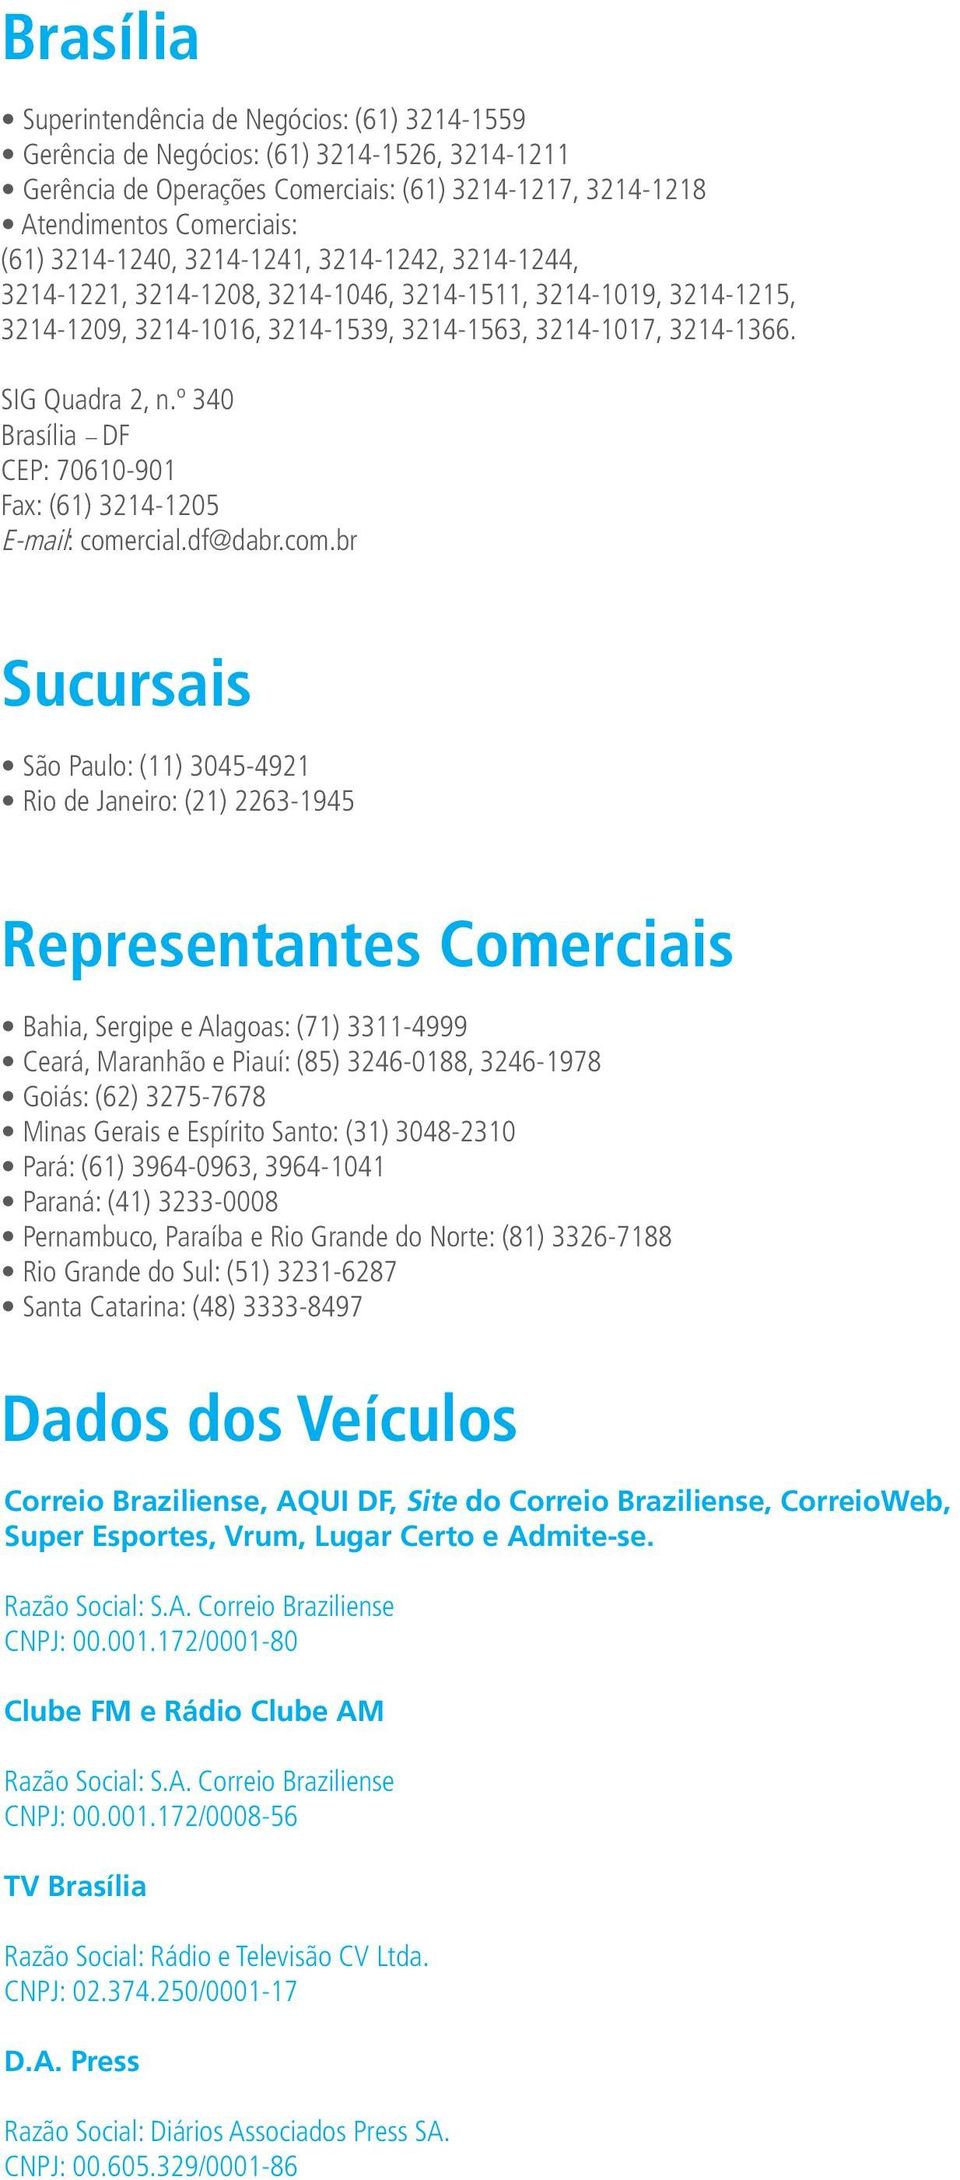 º 340 Brasília DF CEP: 70610-901 Fax: (61) 3214-1205 E-mail: come